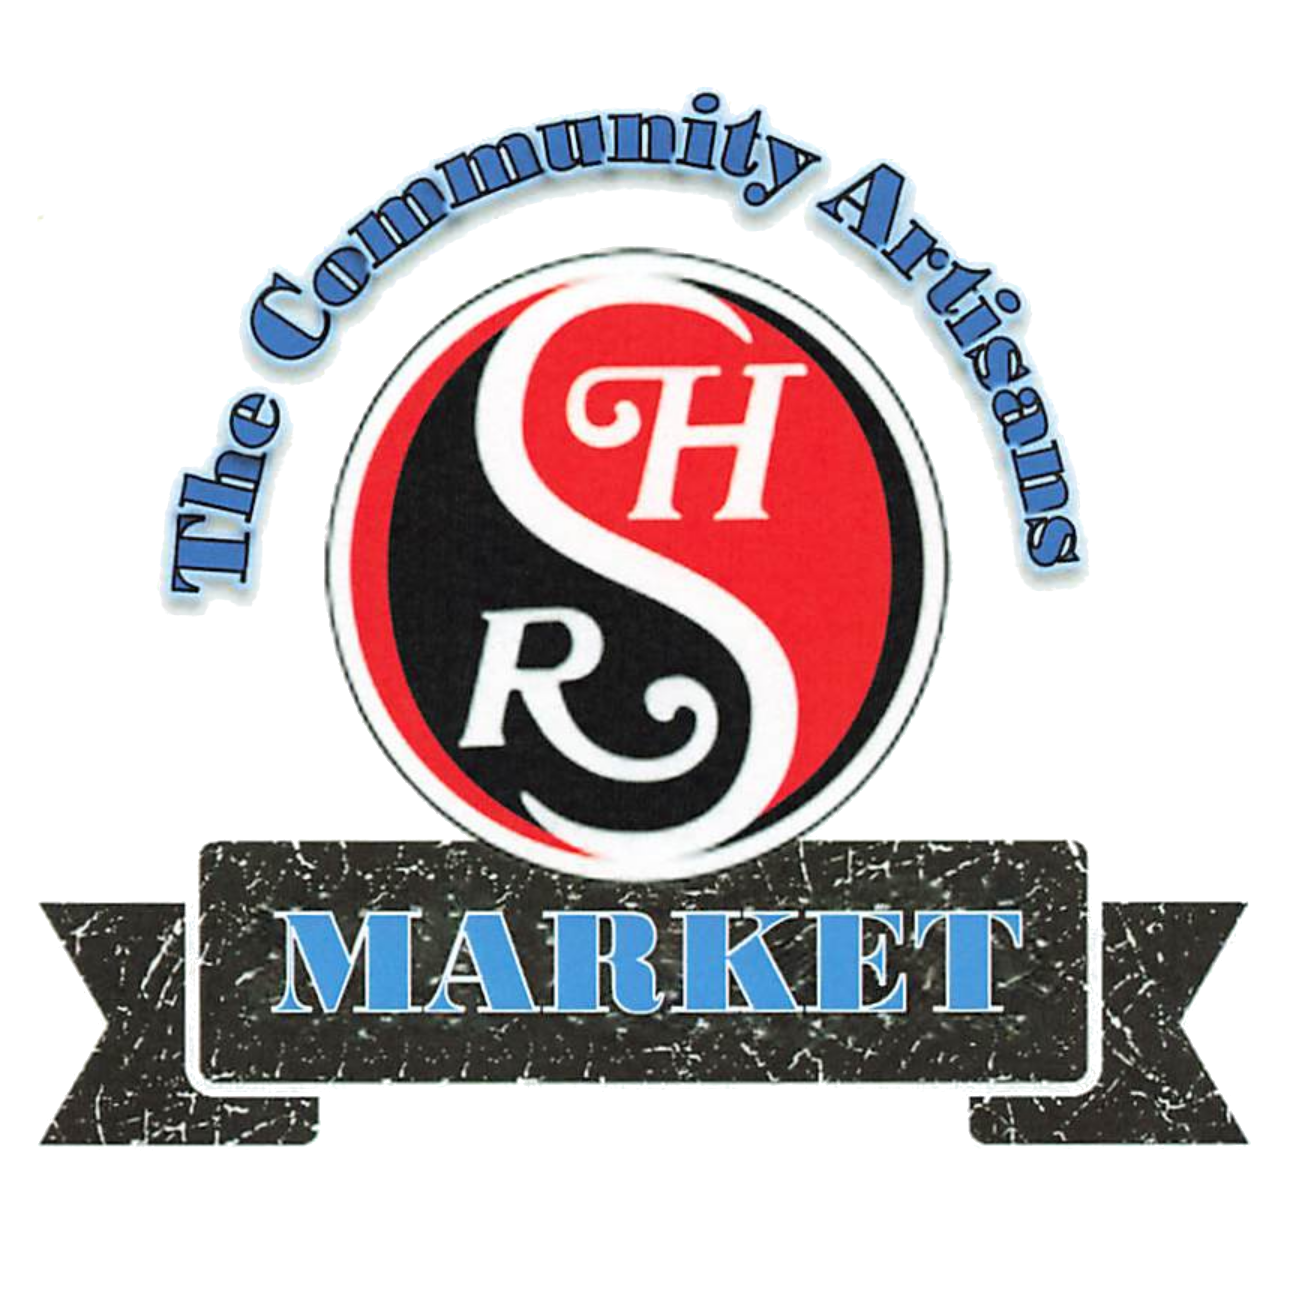 Community Artisan Market Logo